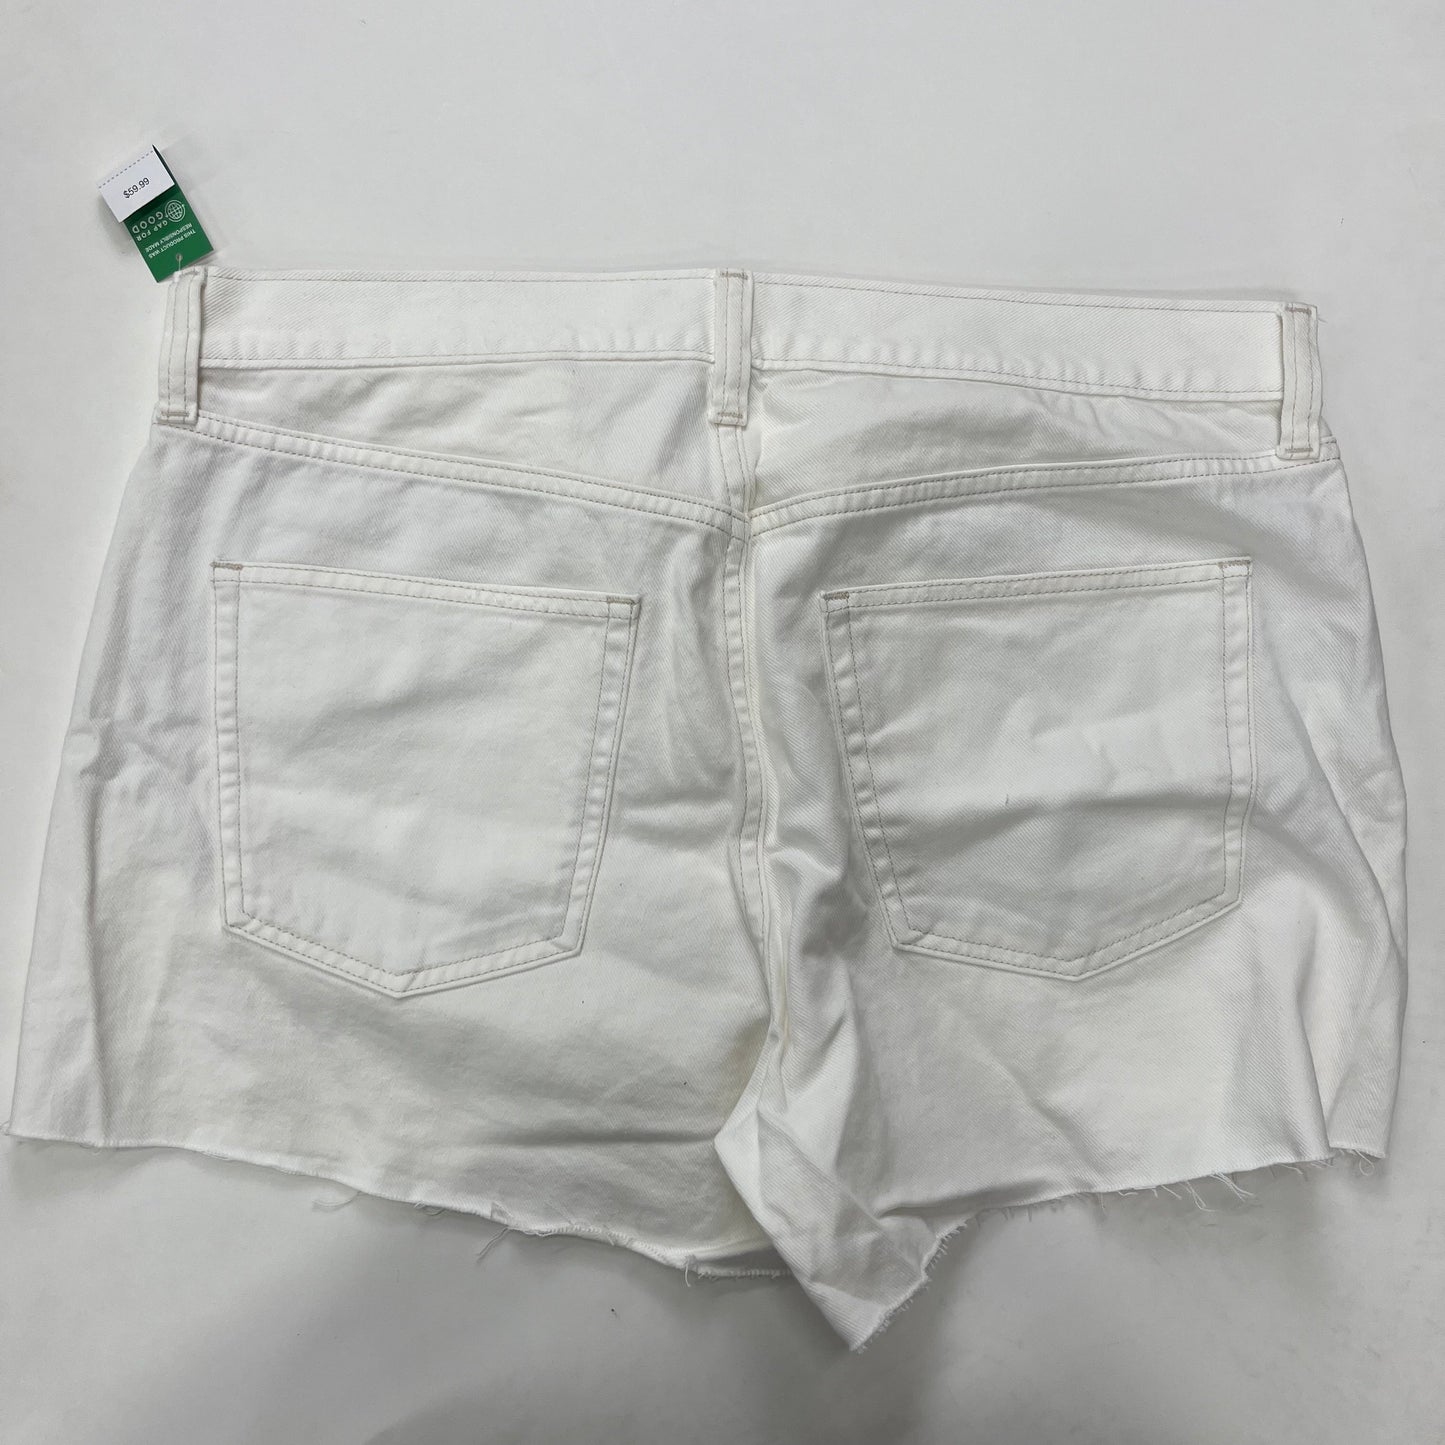 Cream Shorts Gap NWT, Size 14